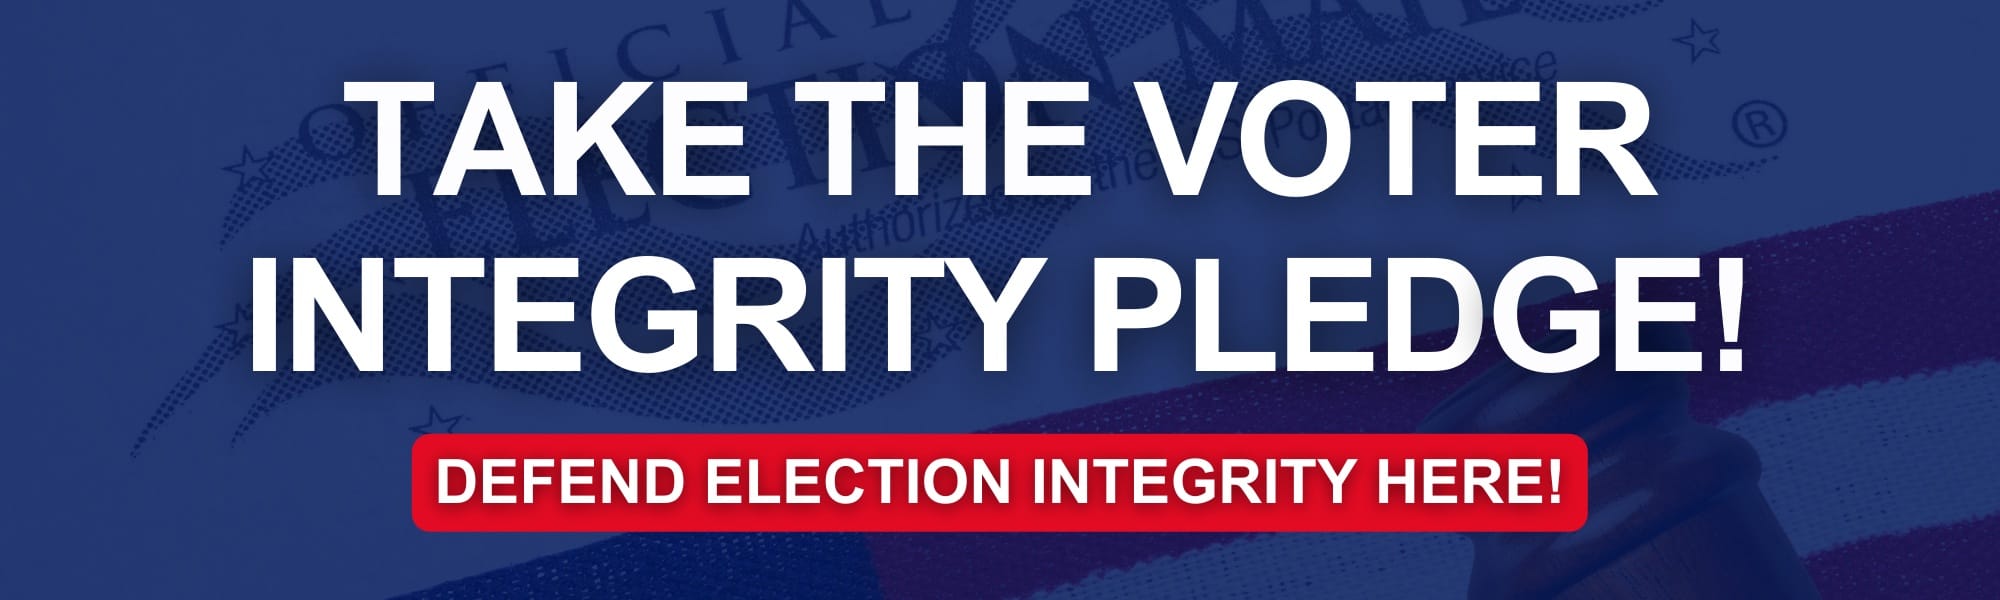 Take the Voter Integrity Pledge